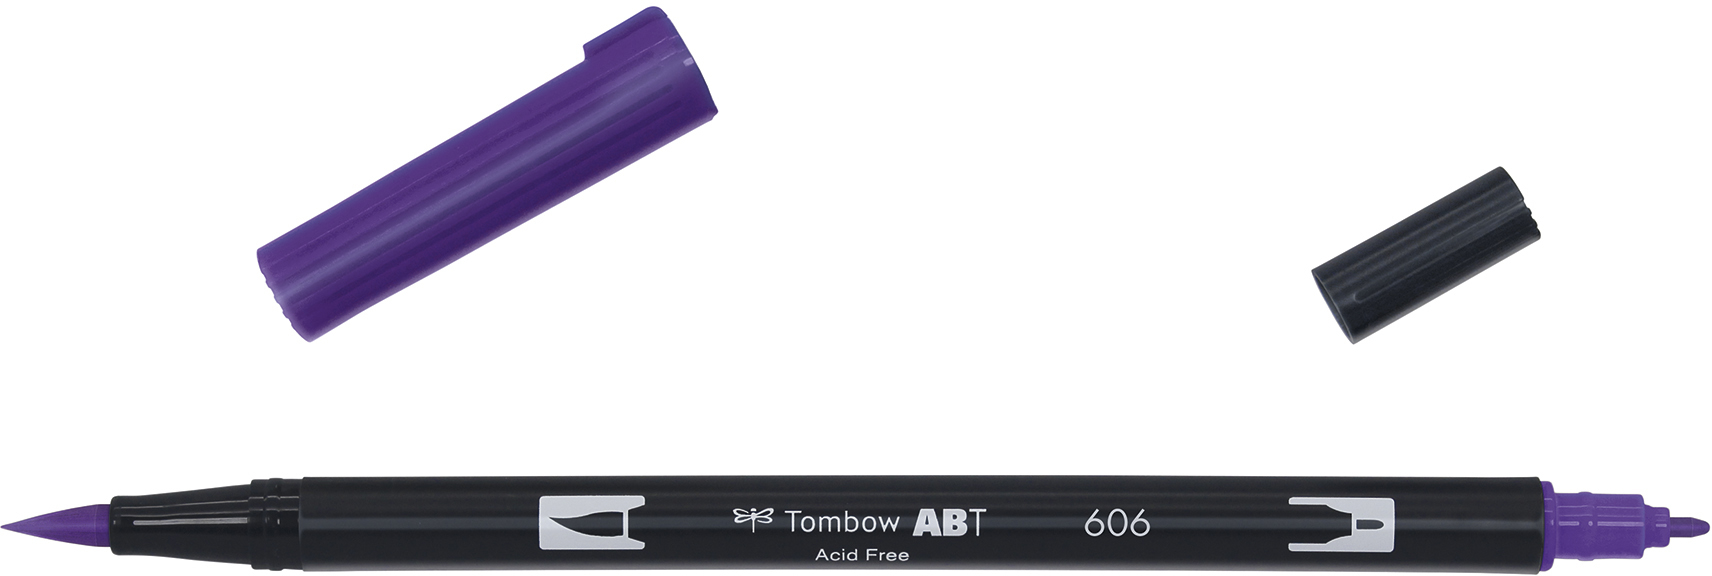 TOMBOW Dual Brush Pen ABT 606 violet